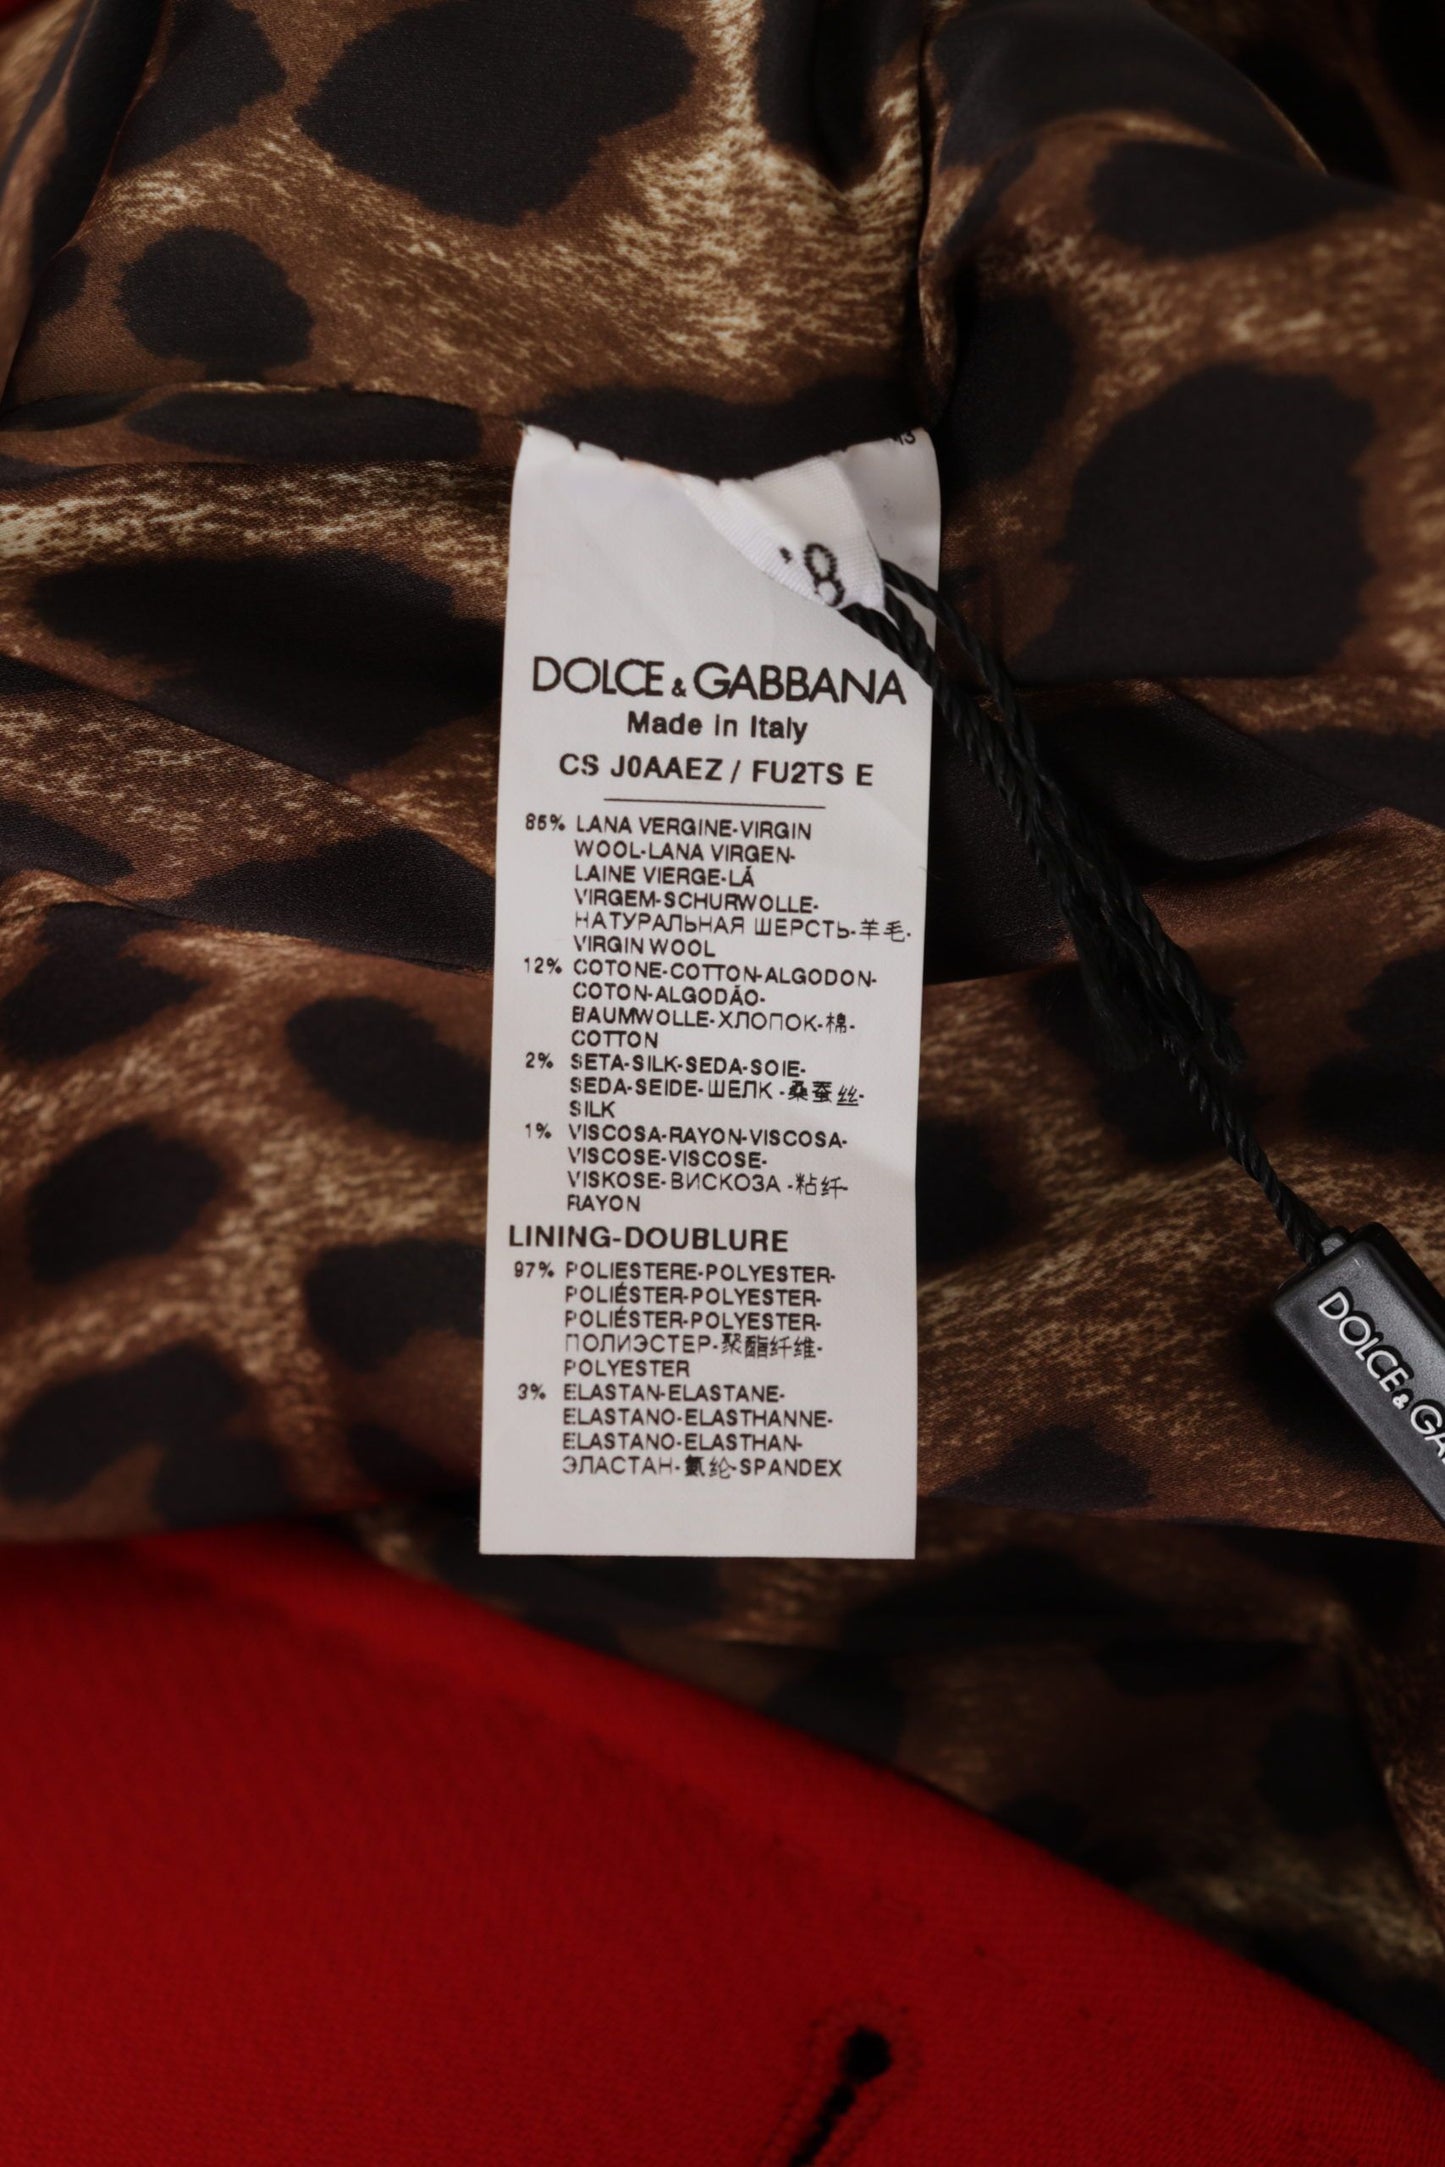 Dolce & Gabbana Elegant Red Leopard Trench Coat